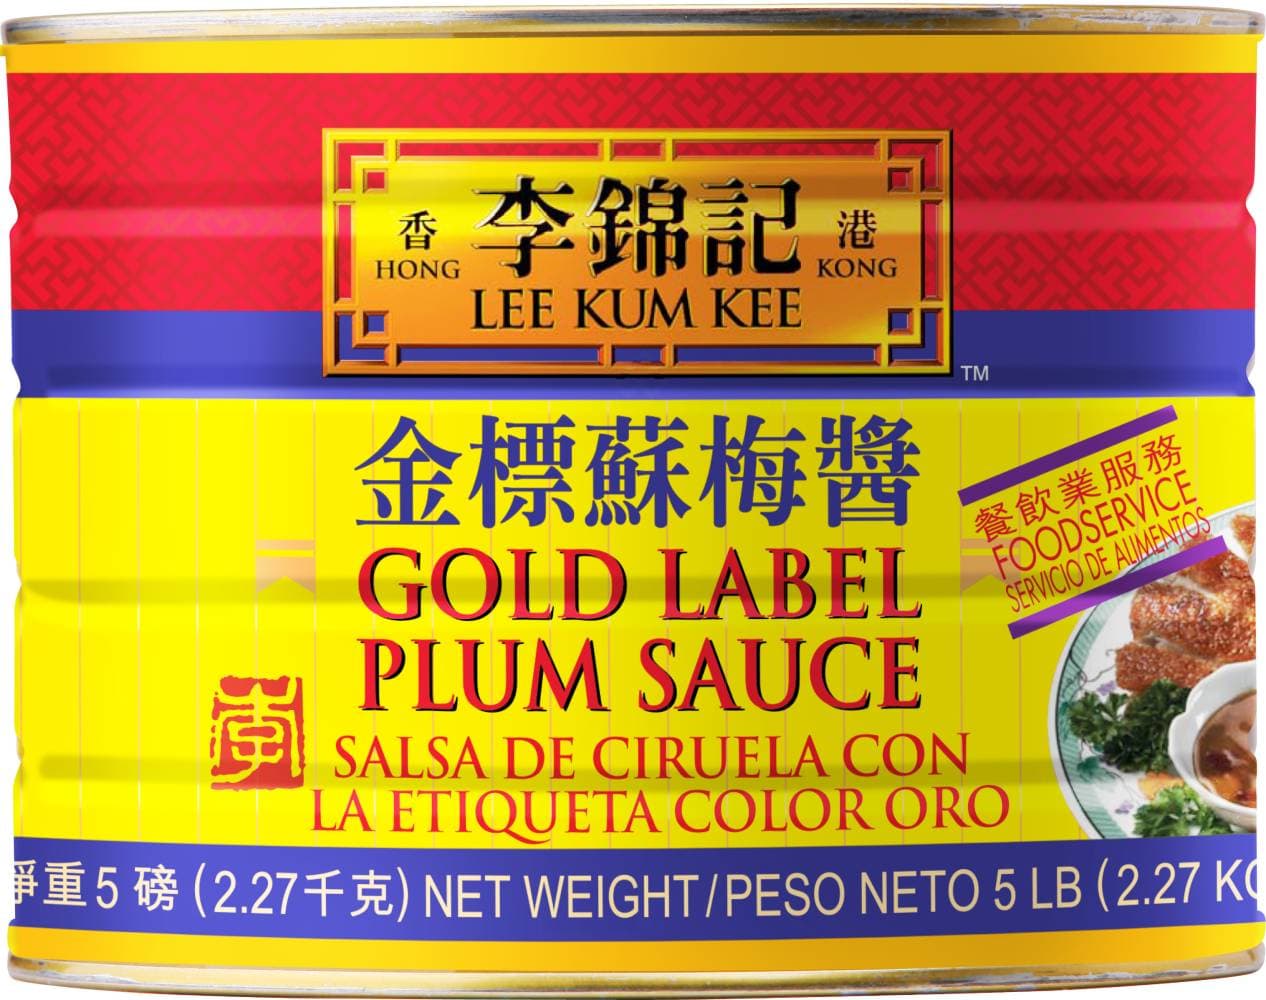 Gold Label Plum Sauce 227kg 